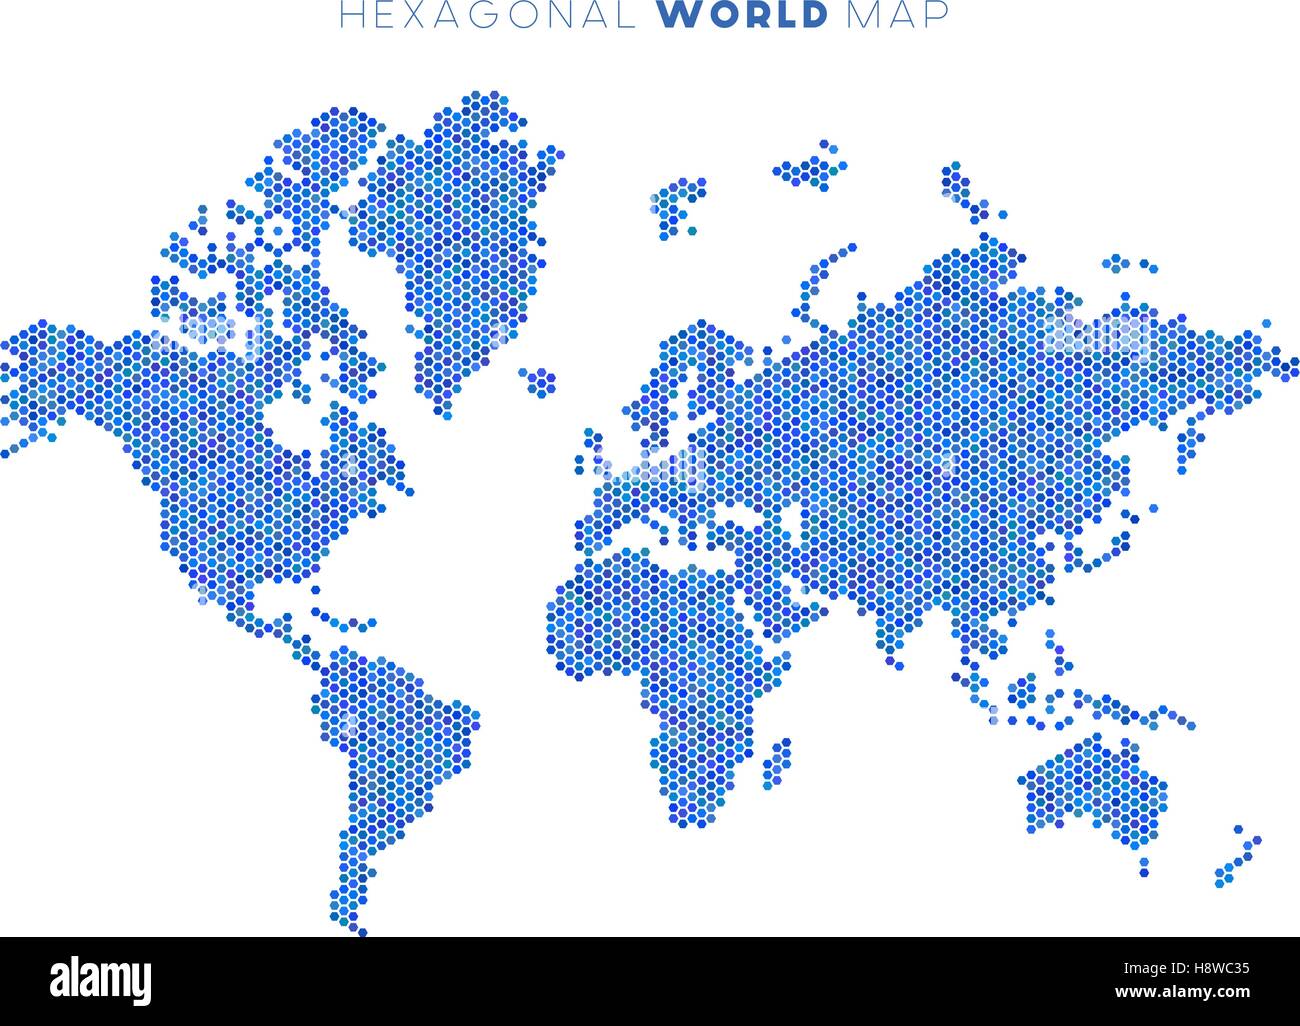 Vector hexagonal world map Stock Vector